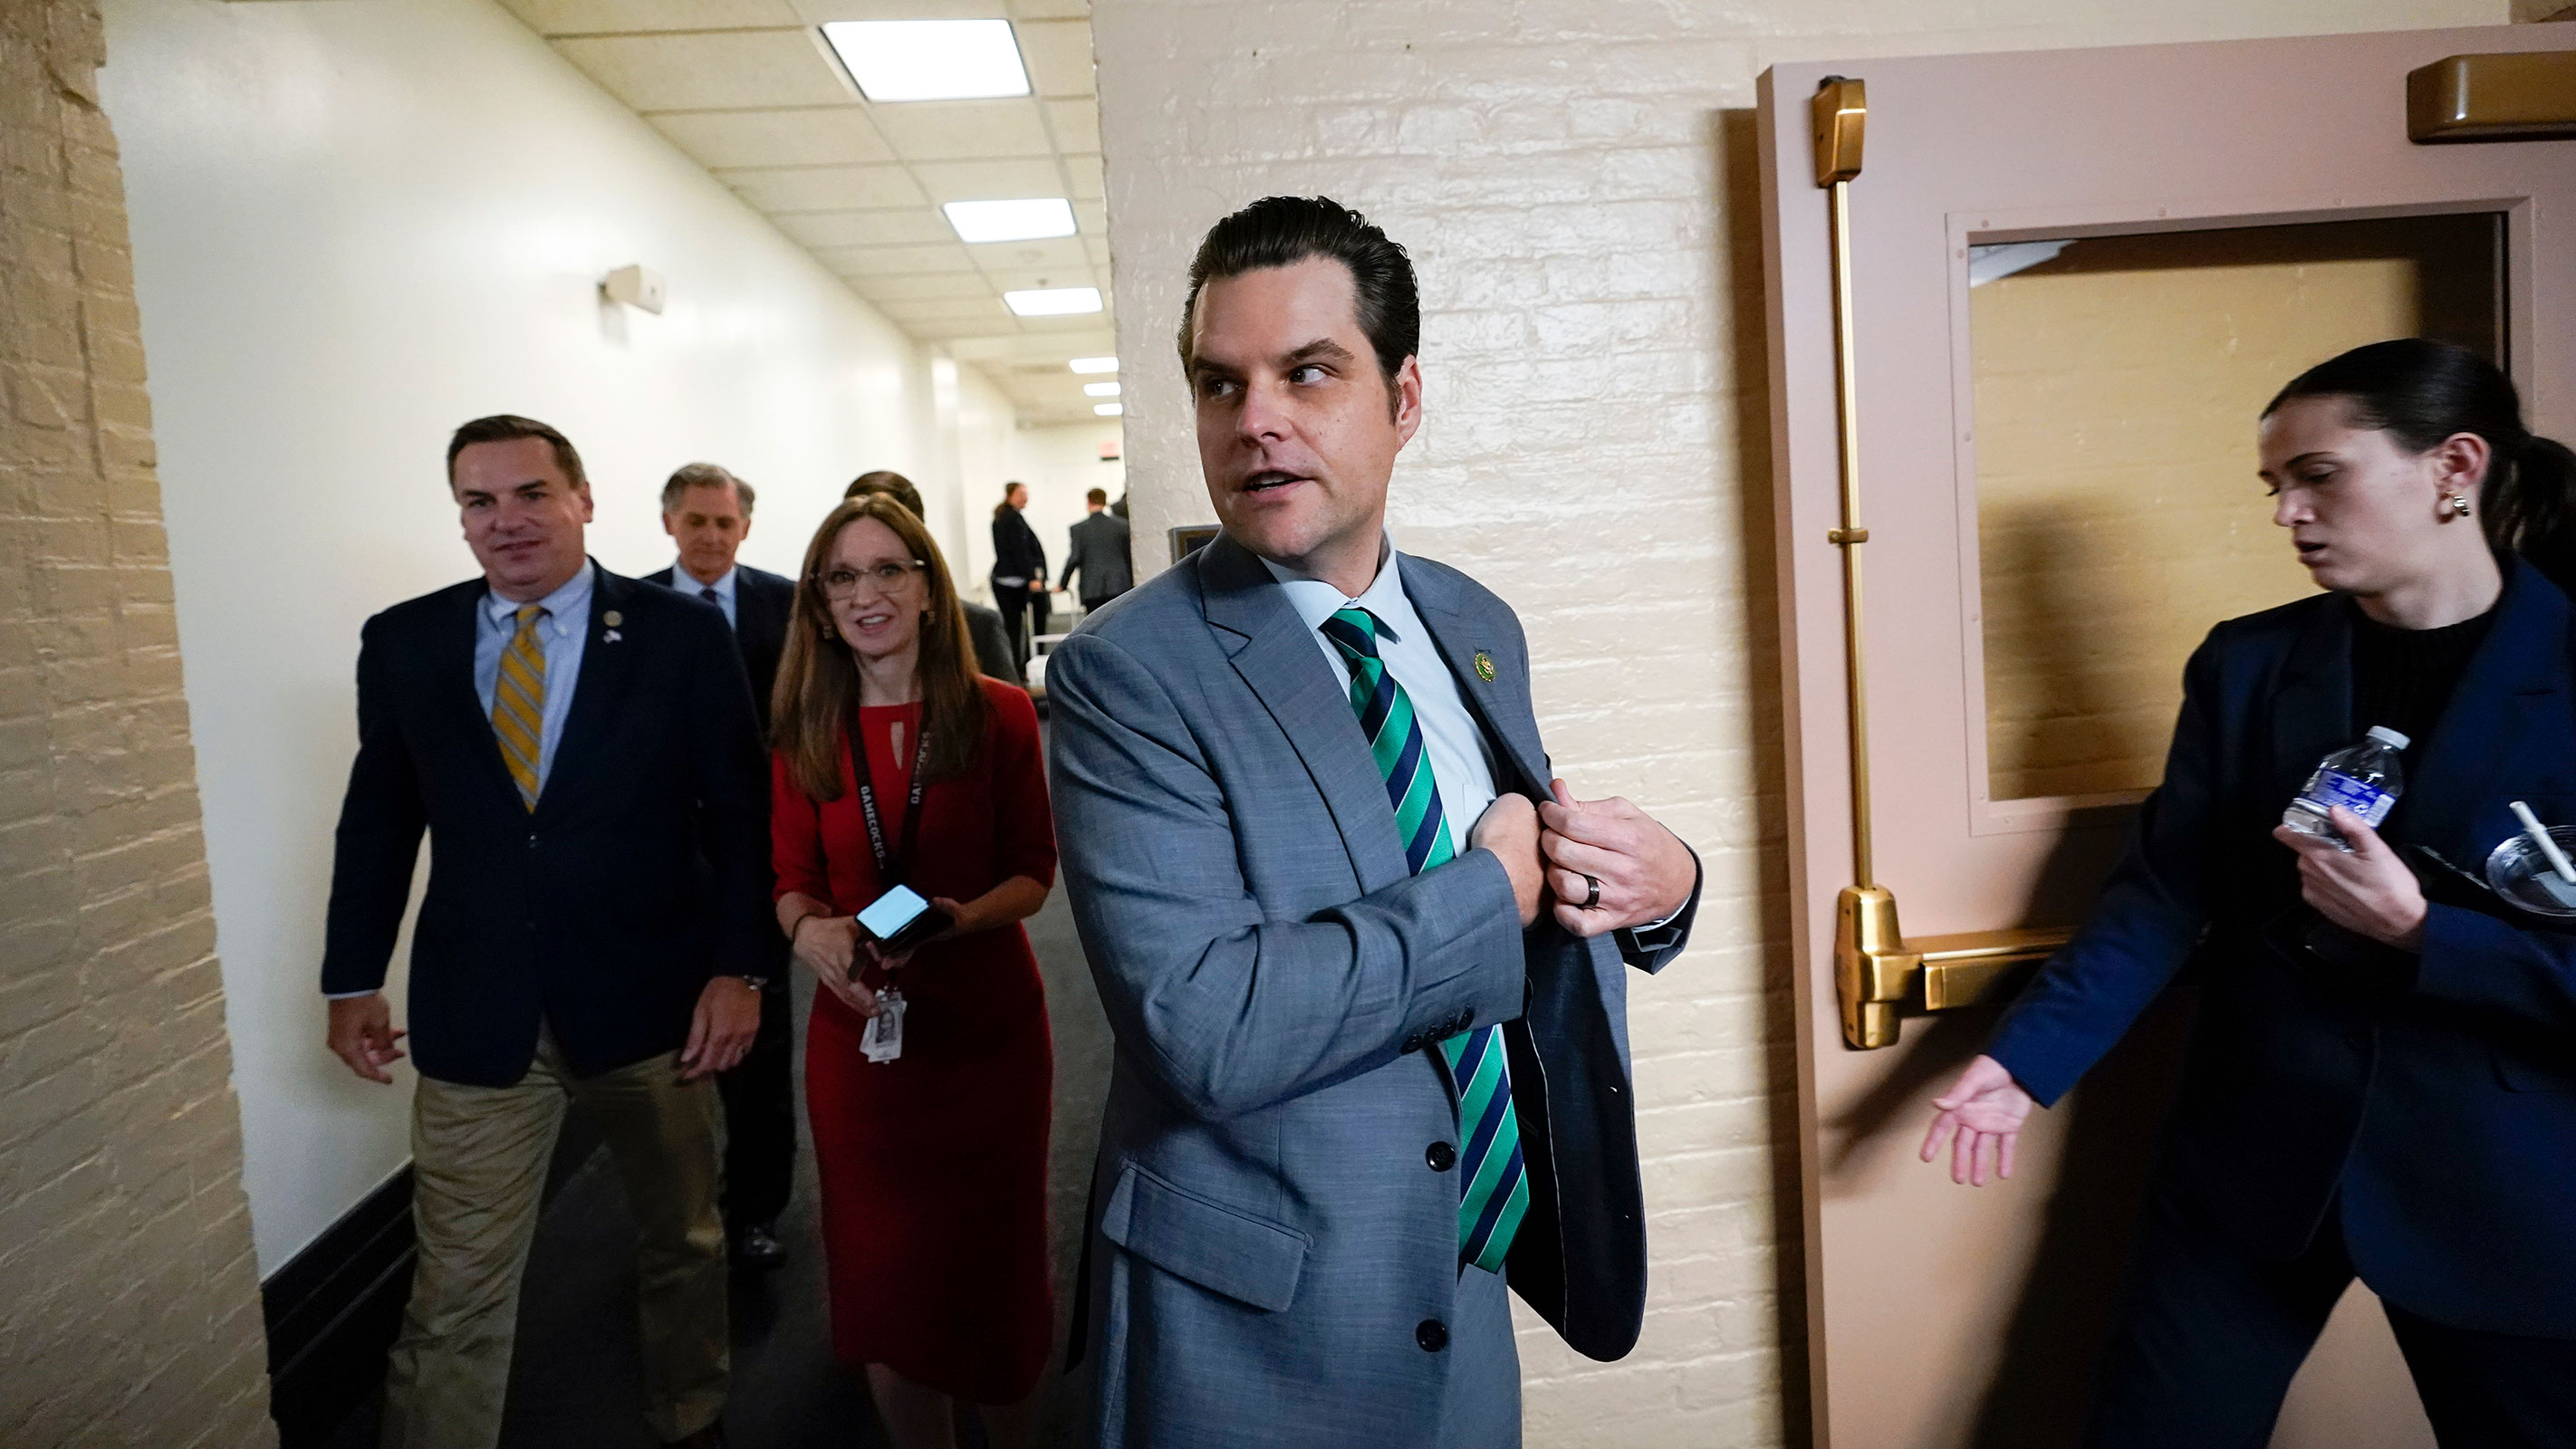 Rep. Matt Gaetz leaves a Republican caucus meeting at the Capitol in Washington, DC, on Thursday.